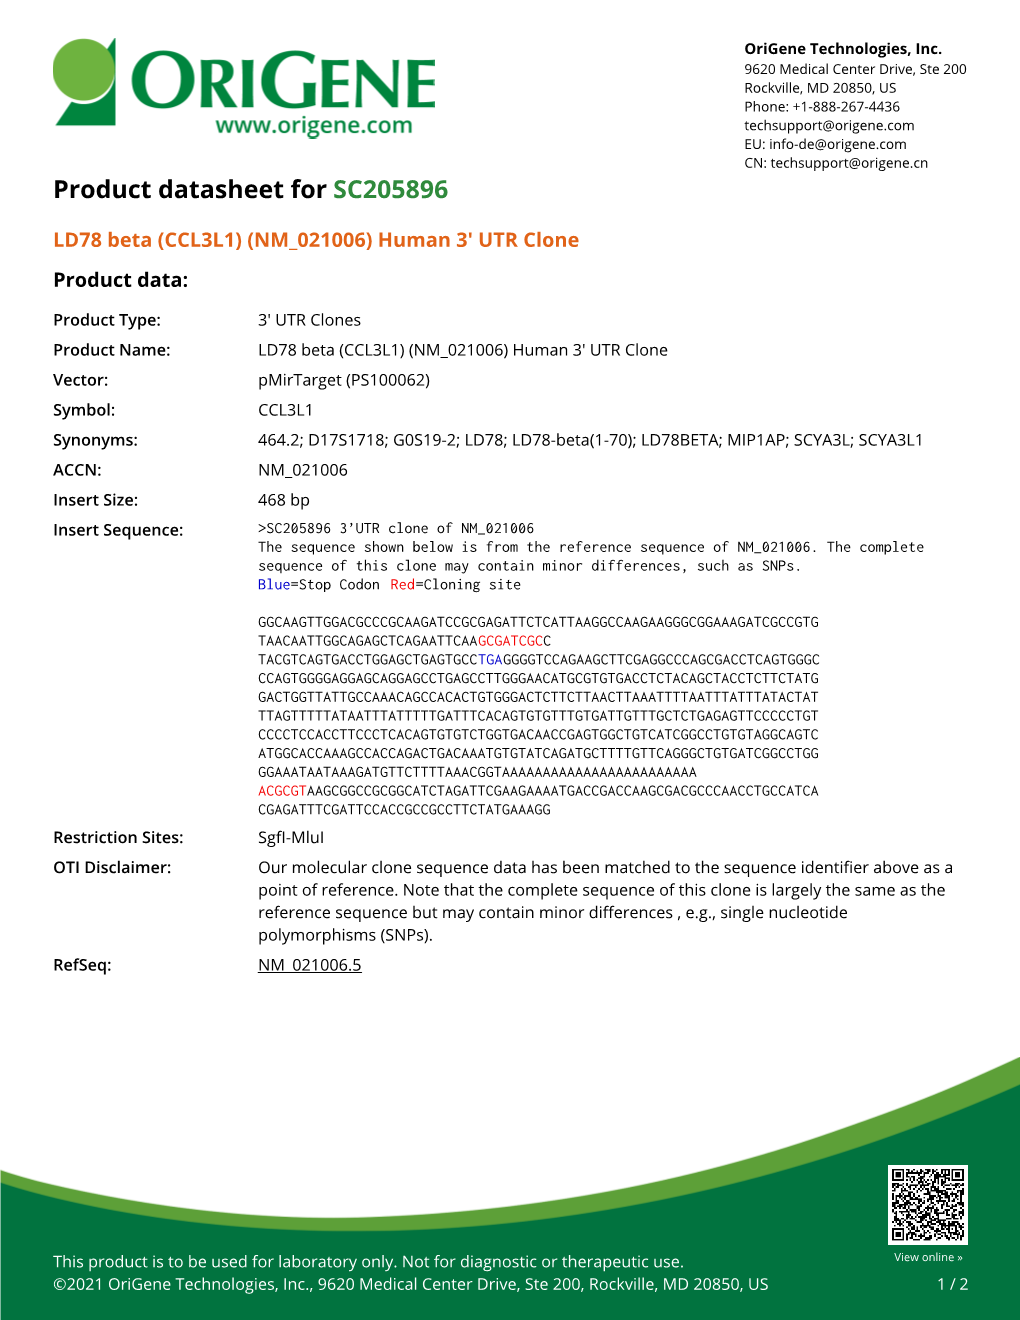 LD78 Beta (CCL3L1) (NM 021006) Human 3' UTR Clone Product Data